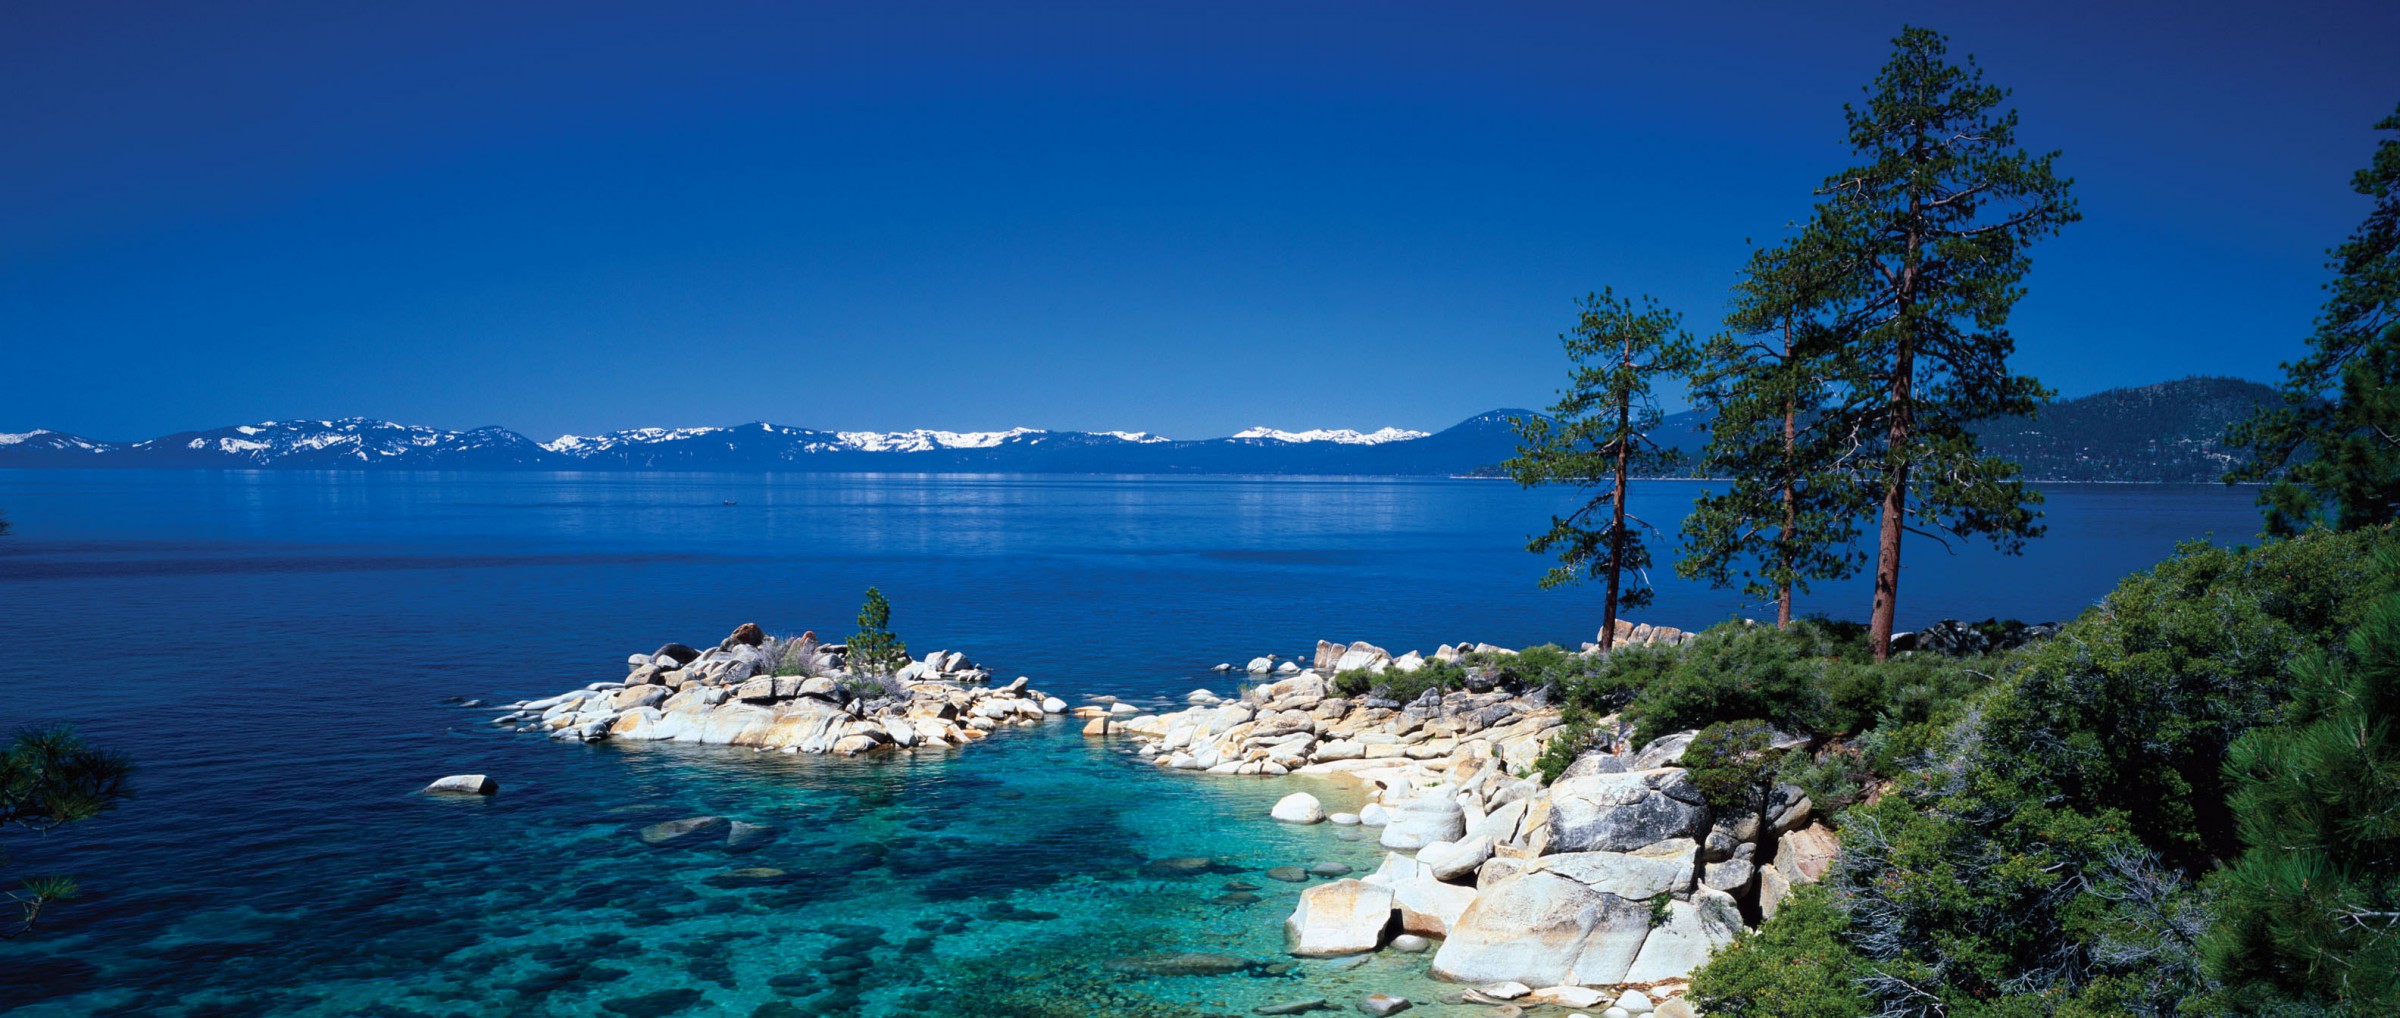 Lake Tahoe Large Fresh Water Lake In Sierra Nevada Of The United States (1)